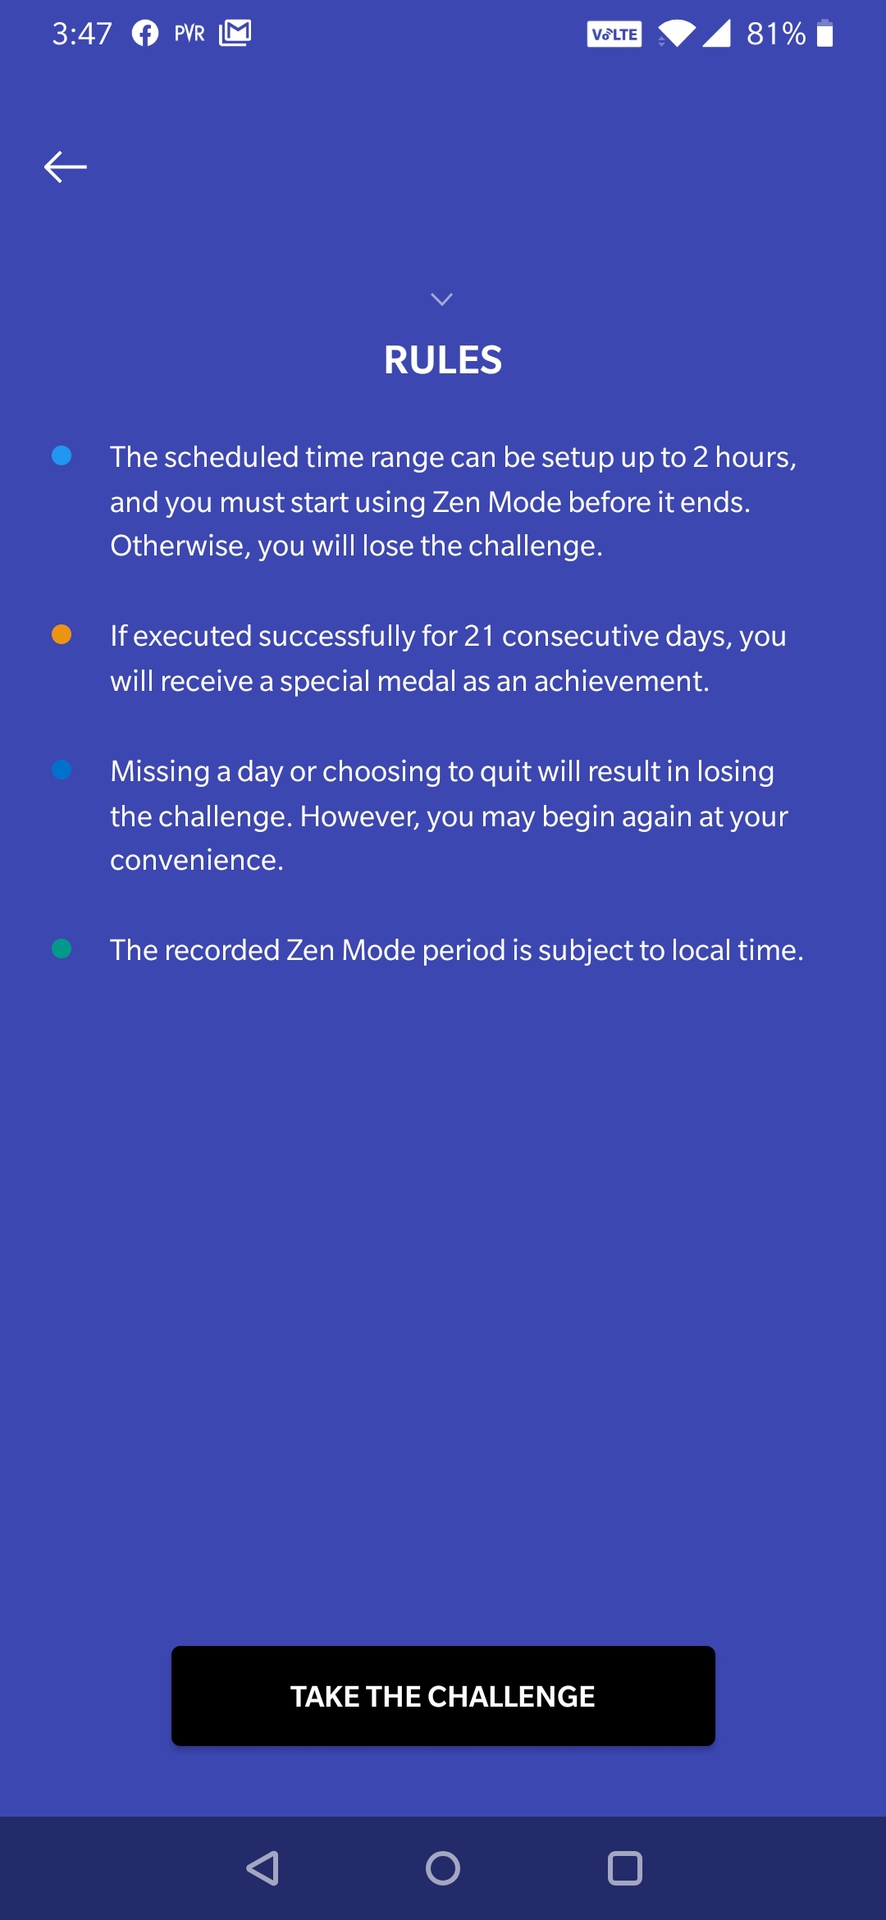 OnePlus Zen Mode Update 21 day challenge 2